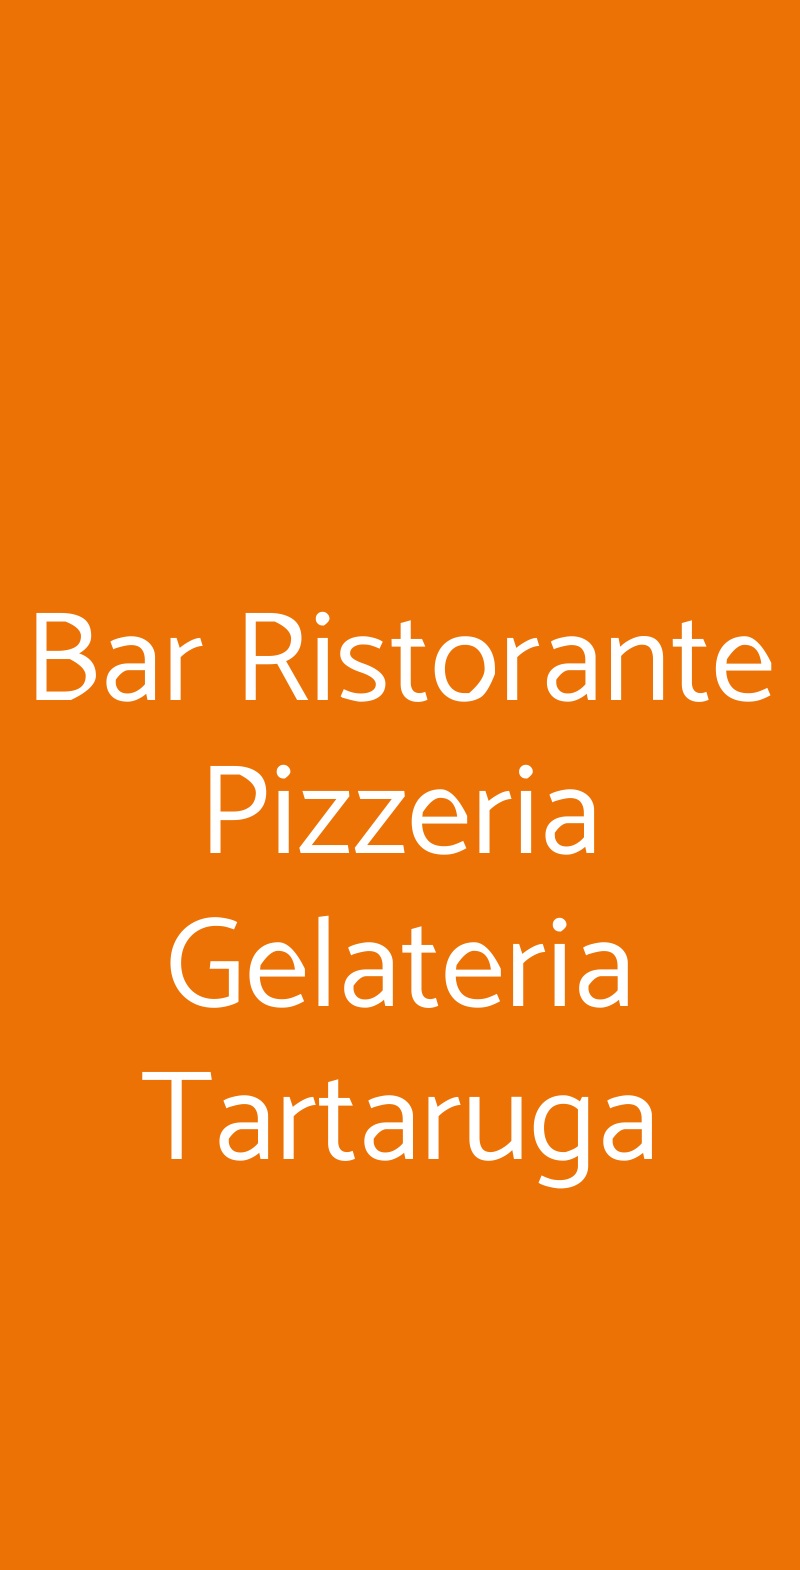 Bar Ristorante Pizzeria Gelateria Tartaruga Merate menù 1 pagina